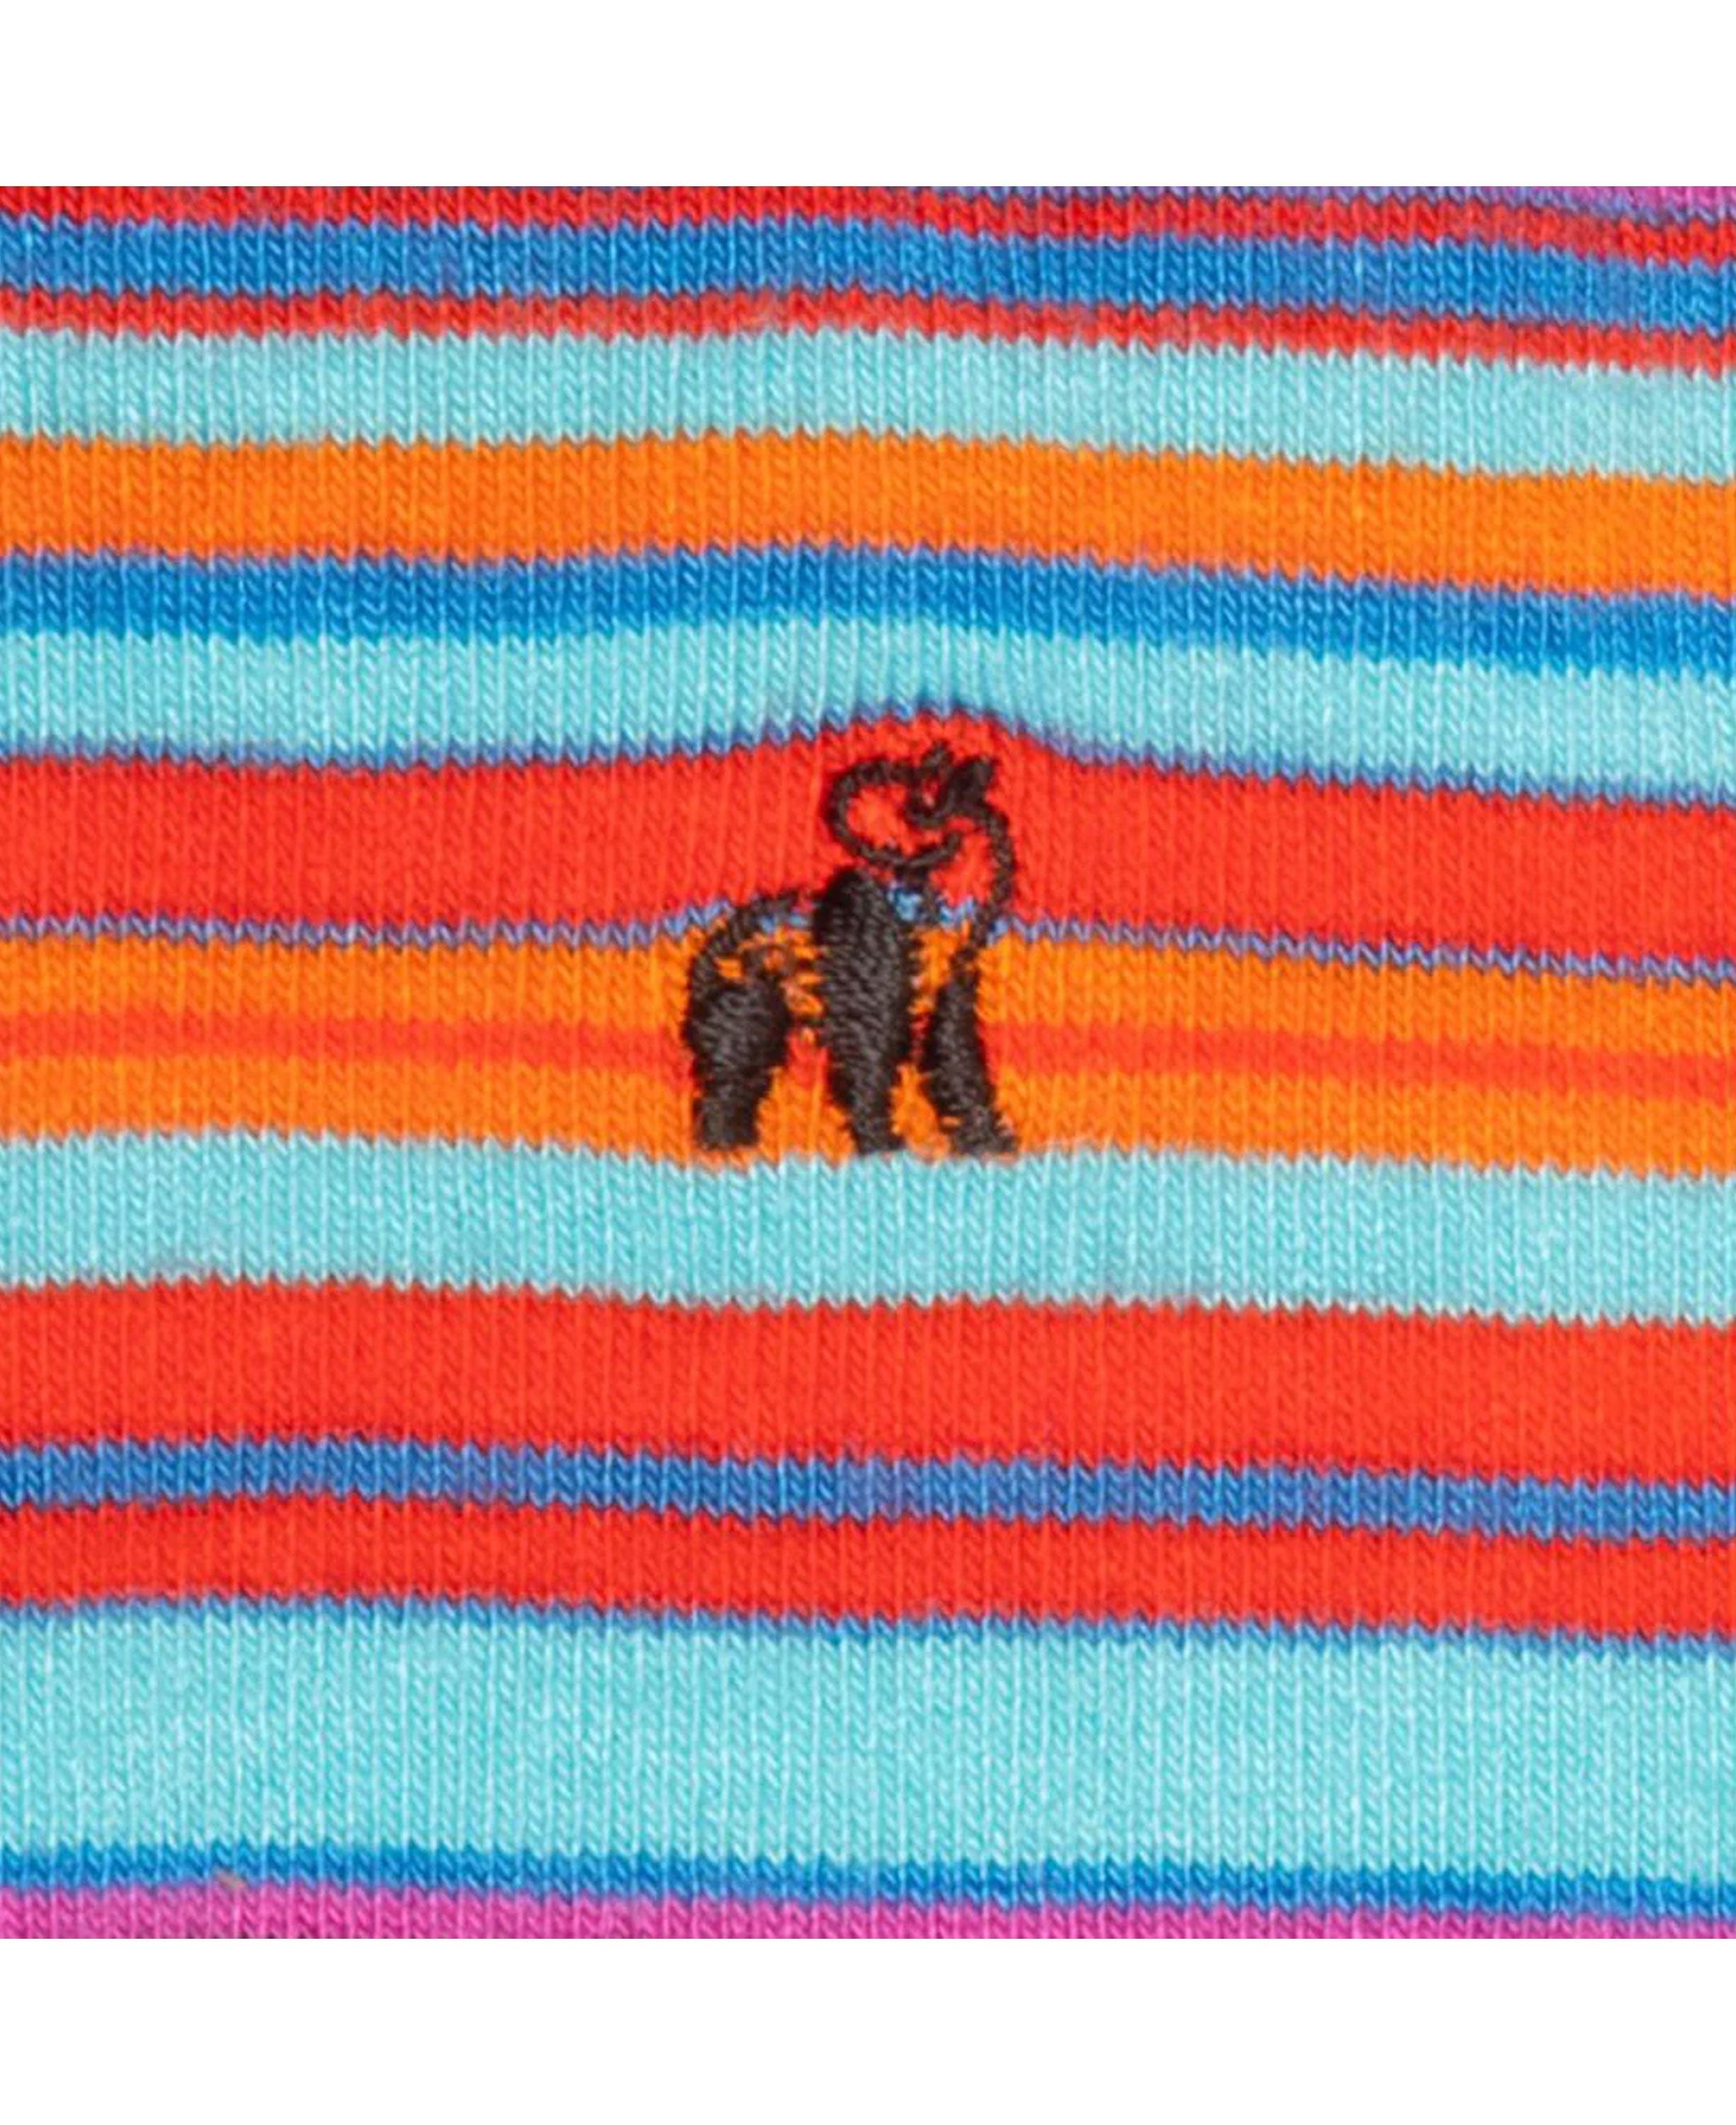 Striped Socks - Blue/Red Narrow Striped